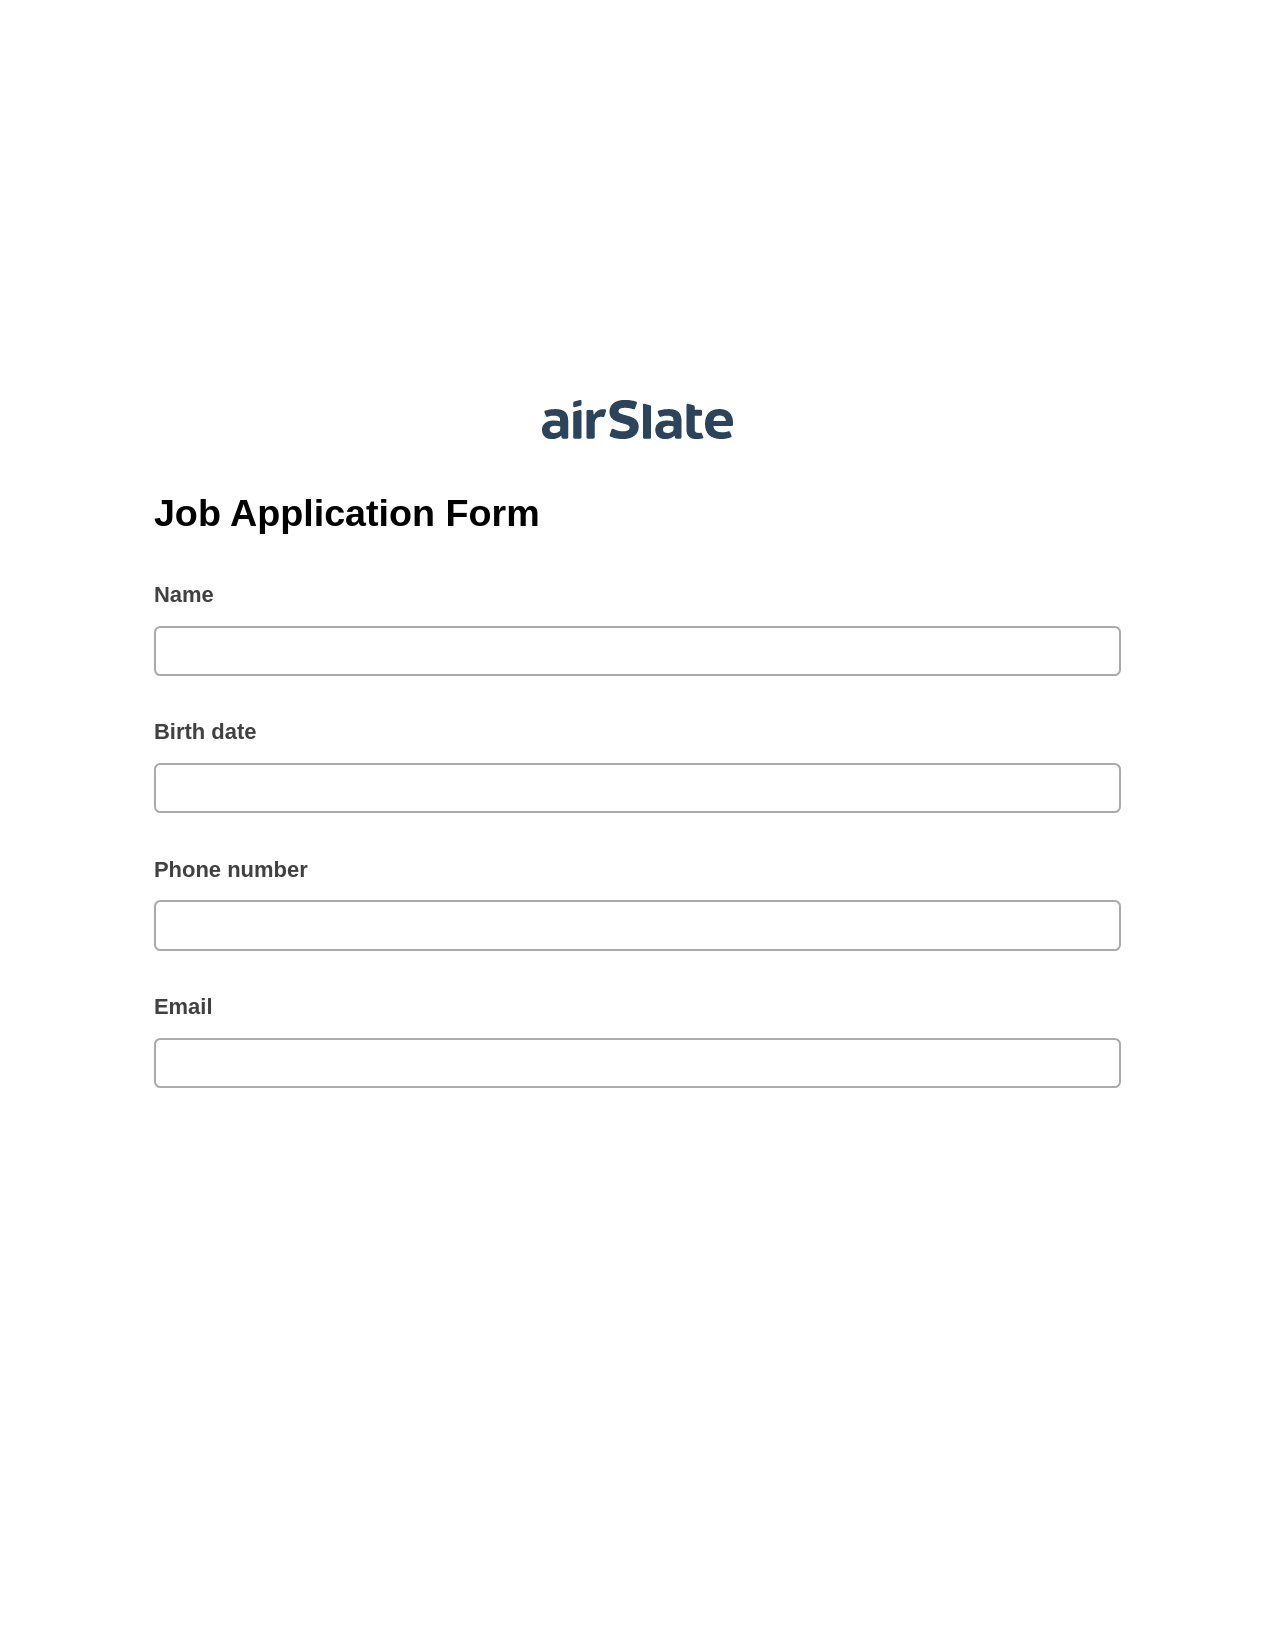 Multirole Job Application Form Pre-fill from Google Sheet Dropdown Options Bot, Reminder Bot, Email Notification Postfinish Bot